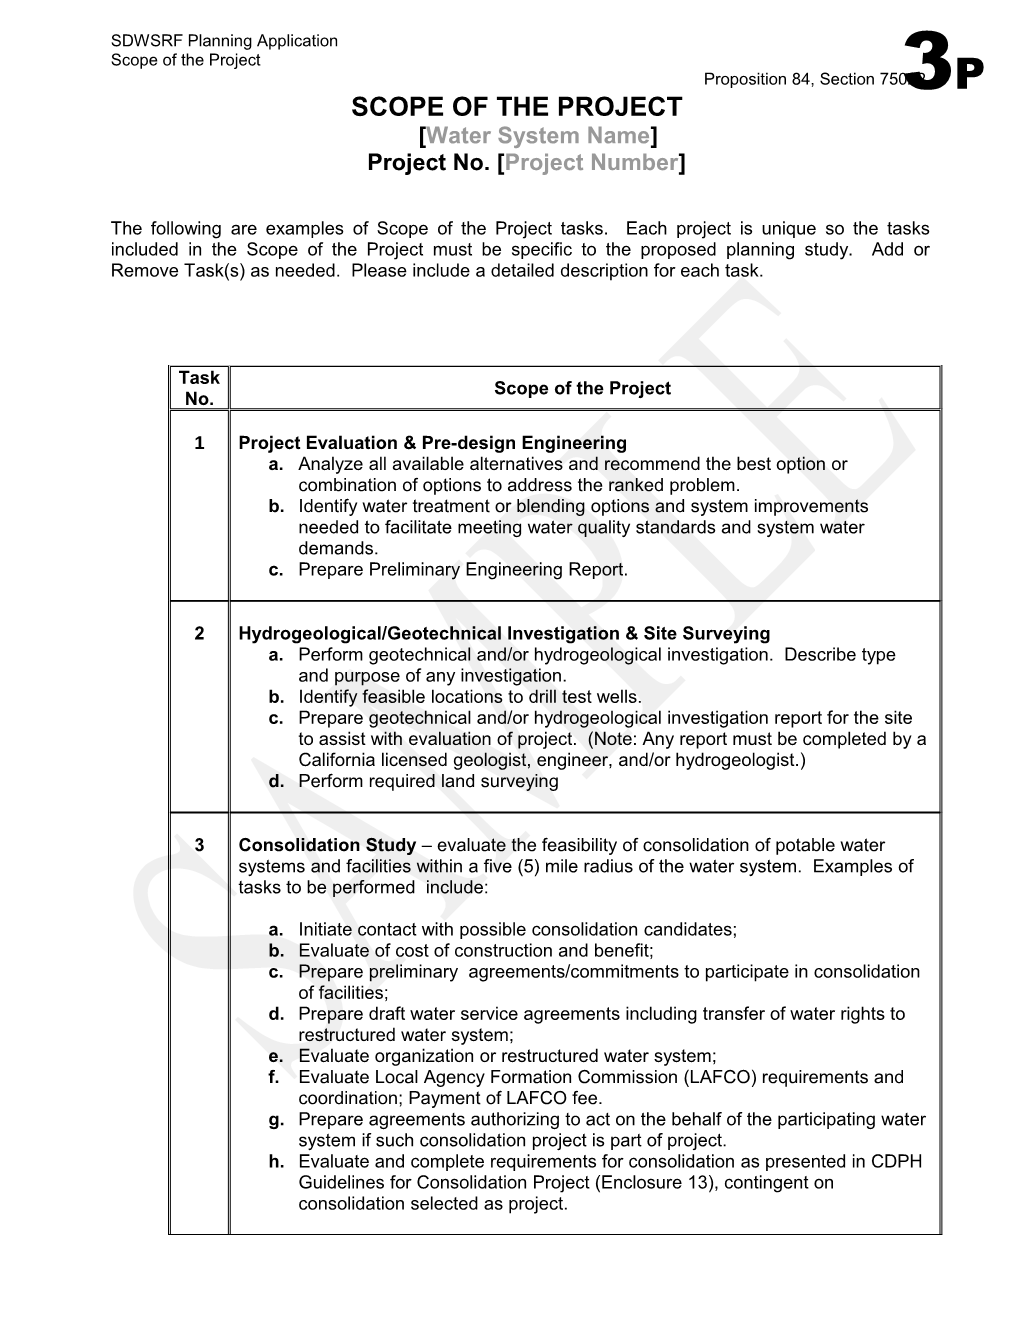 (3) ARRA Applicant Engineering Report Format 5-20-2009